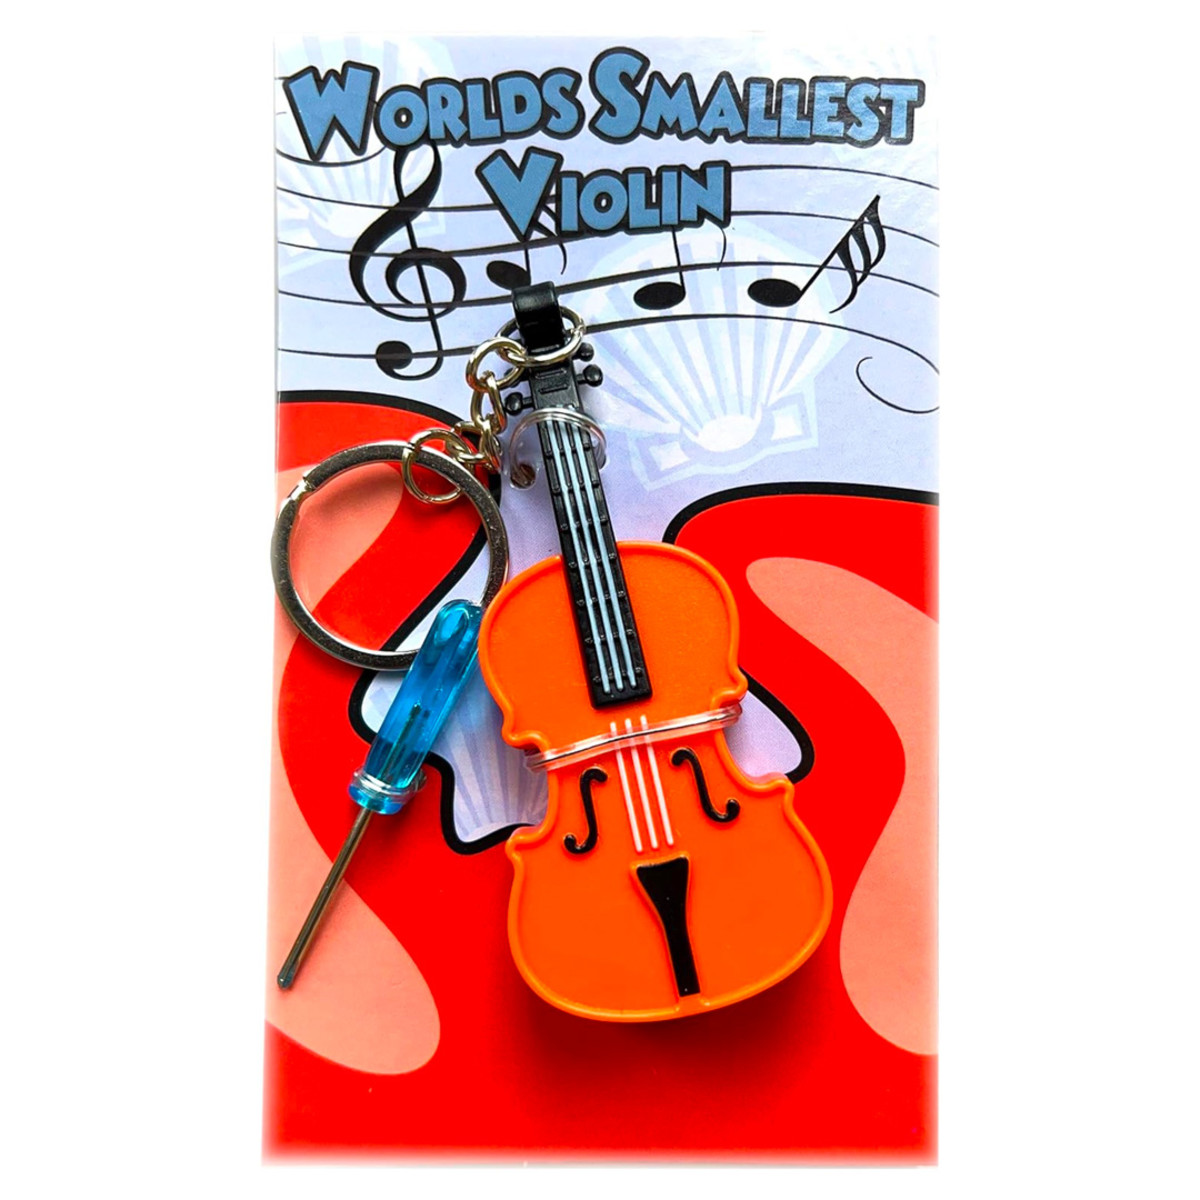 https://www.mensjournal.com/.image/t_share/MjAxOTExMjM1Mjk3MDI3ODc0/munnygrubbers-worlds-smallest-violin.jpg